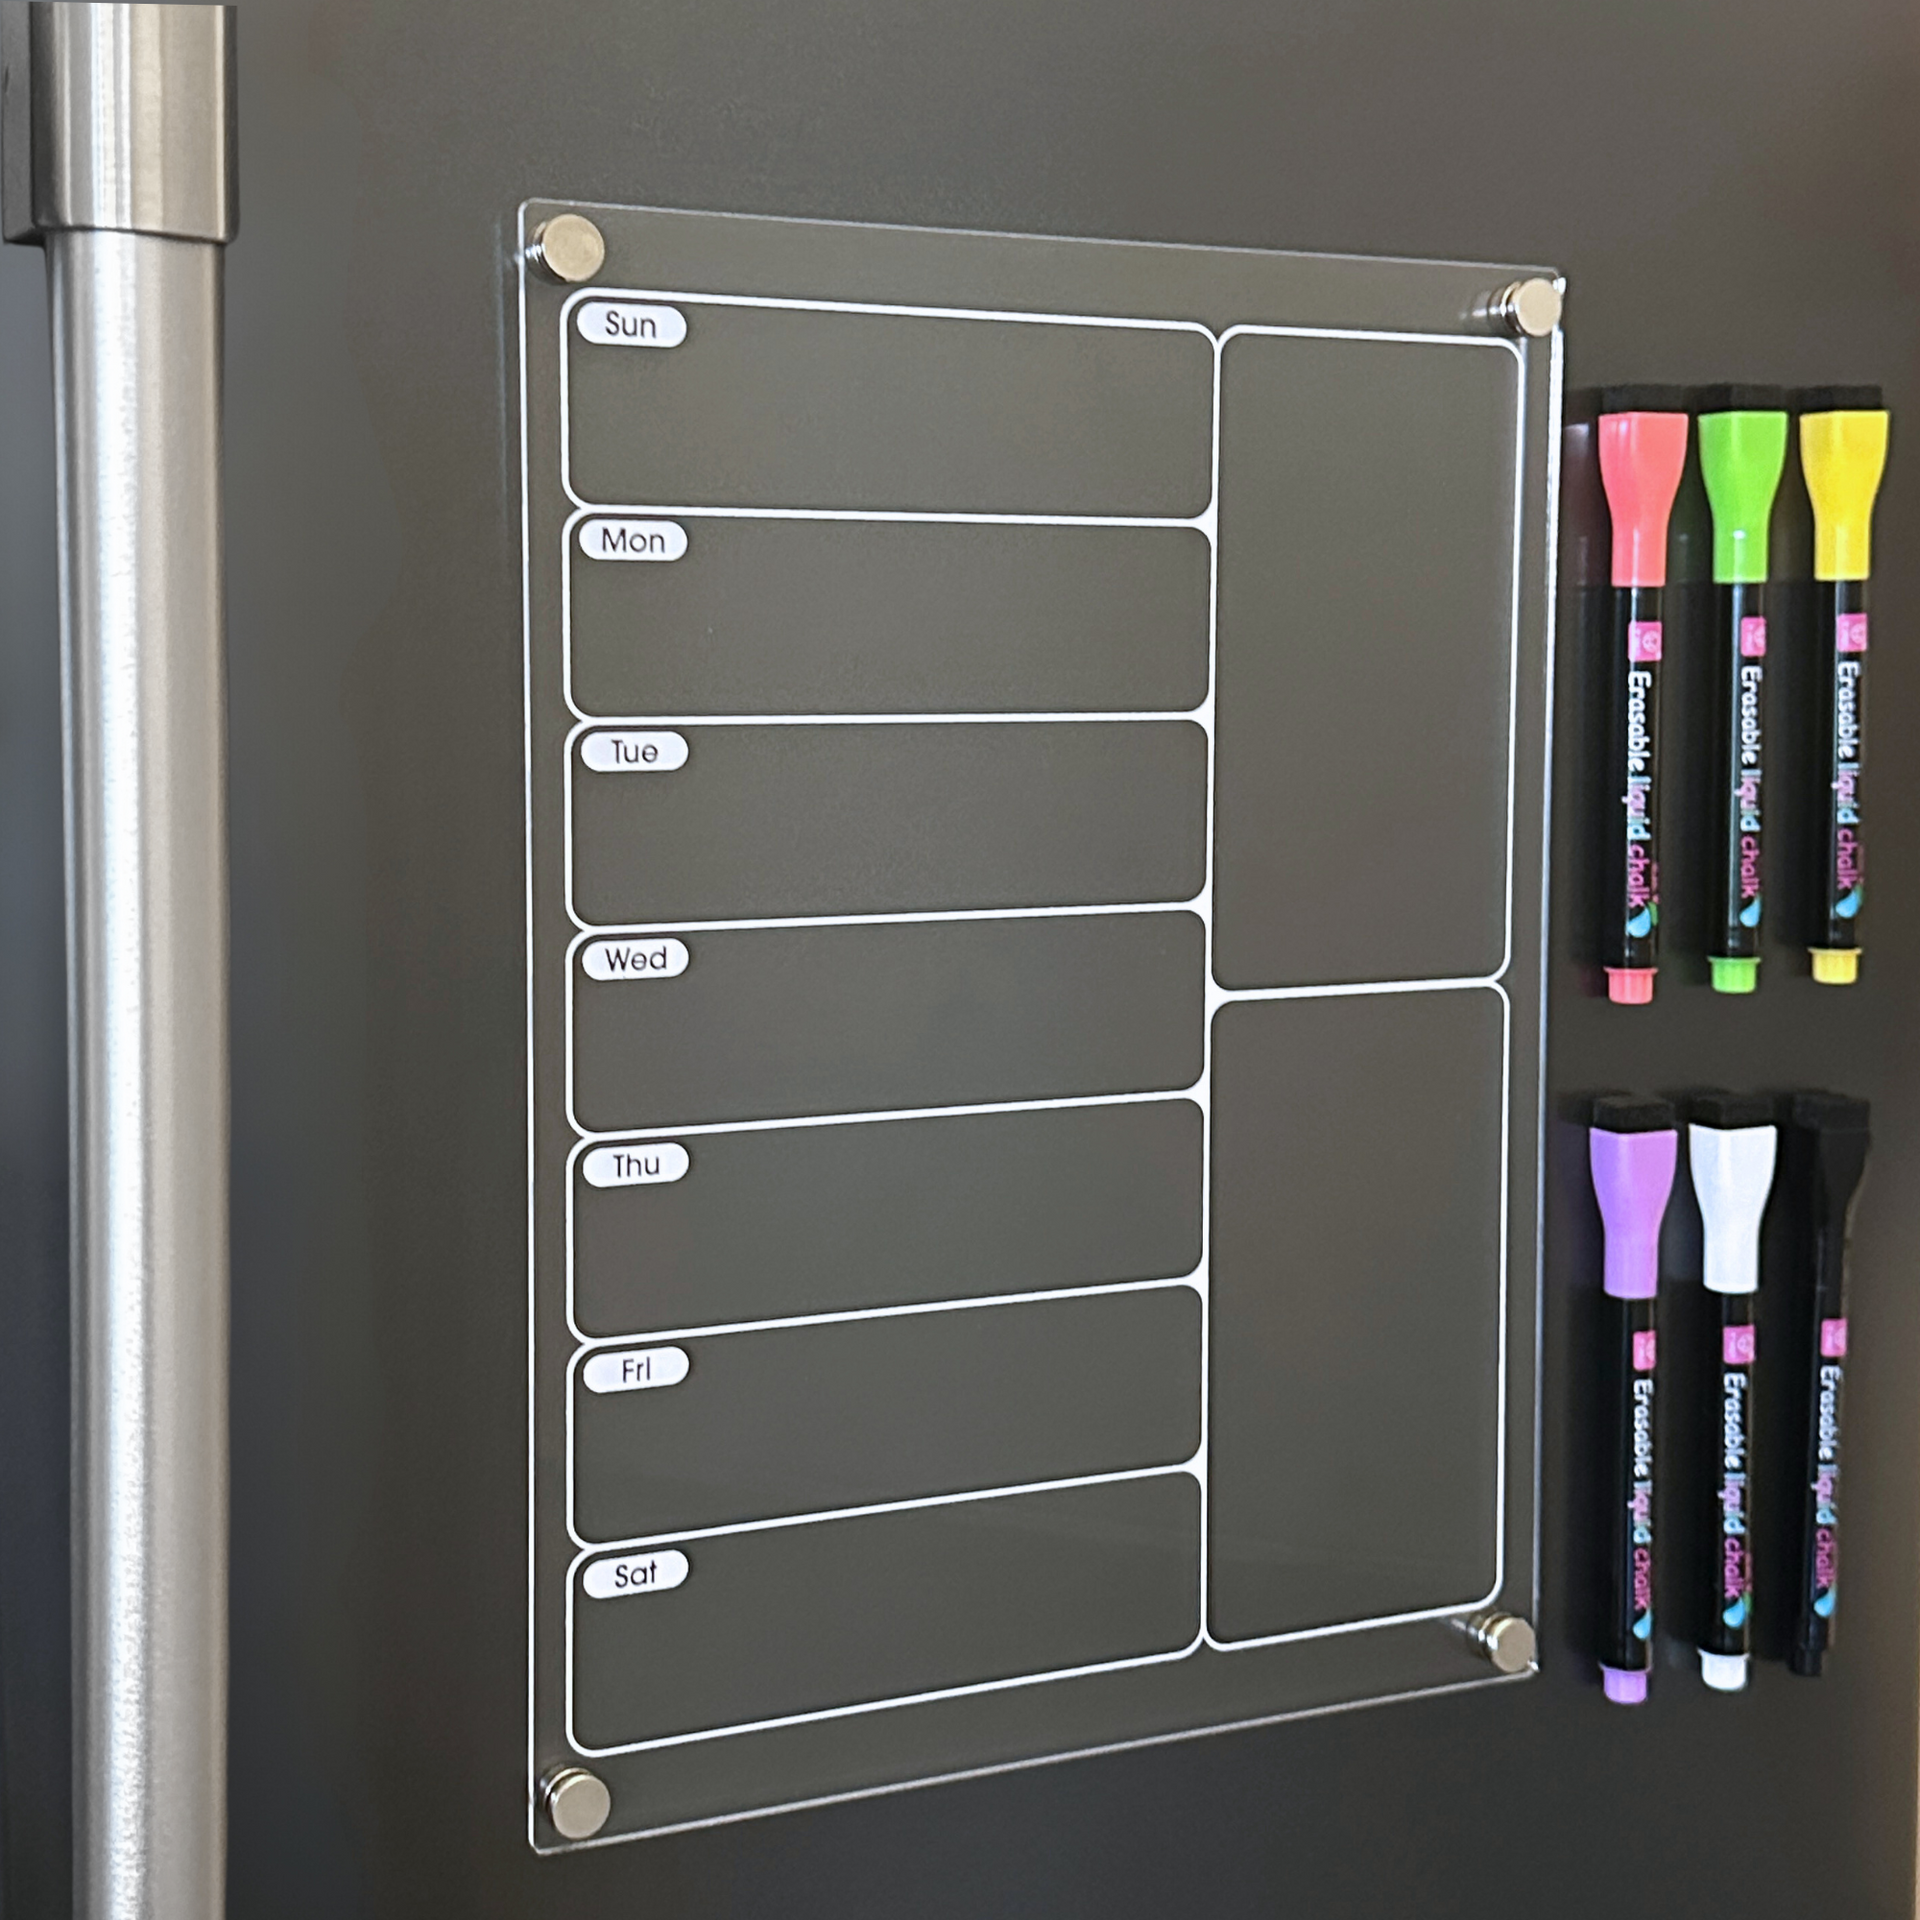 Magnetic Dry Erase Menu Board for Fridge Includes 4 Liquid Chalk